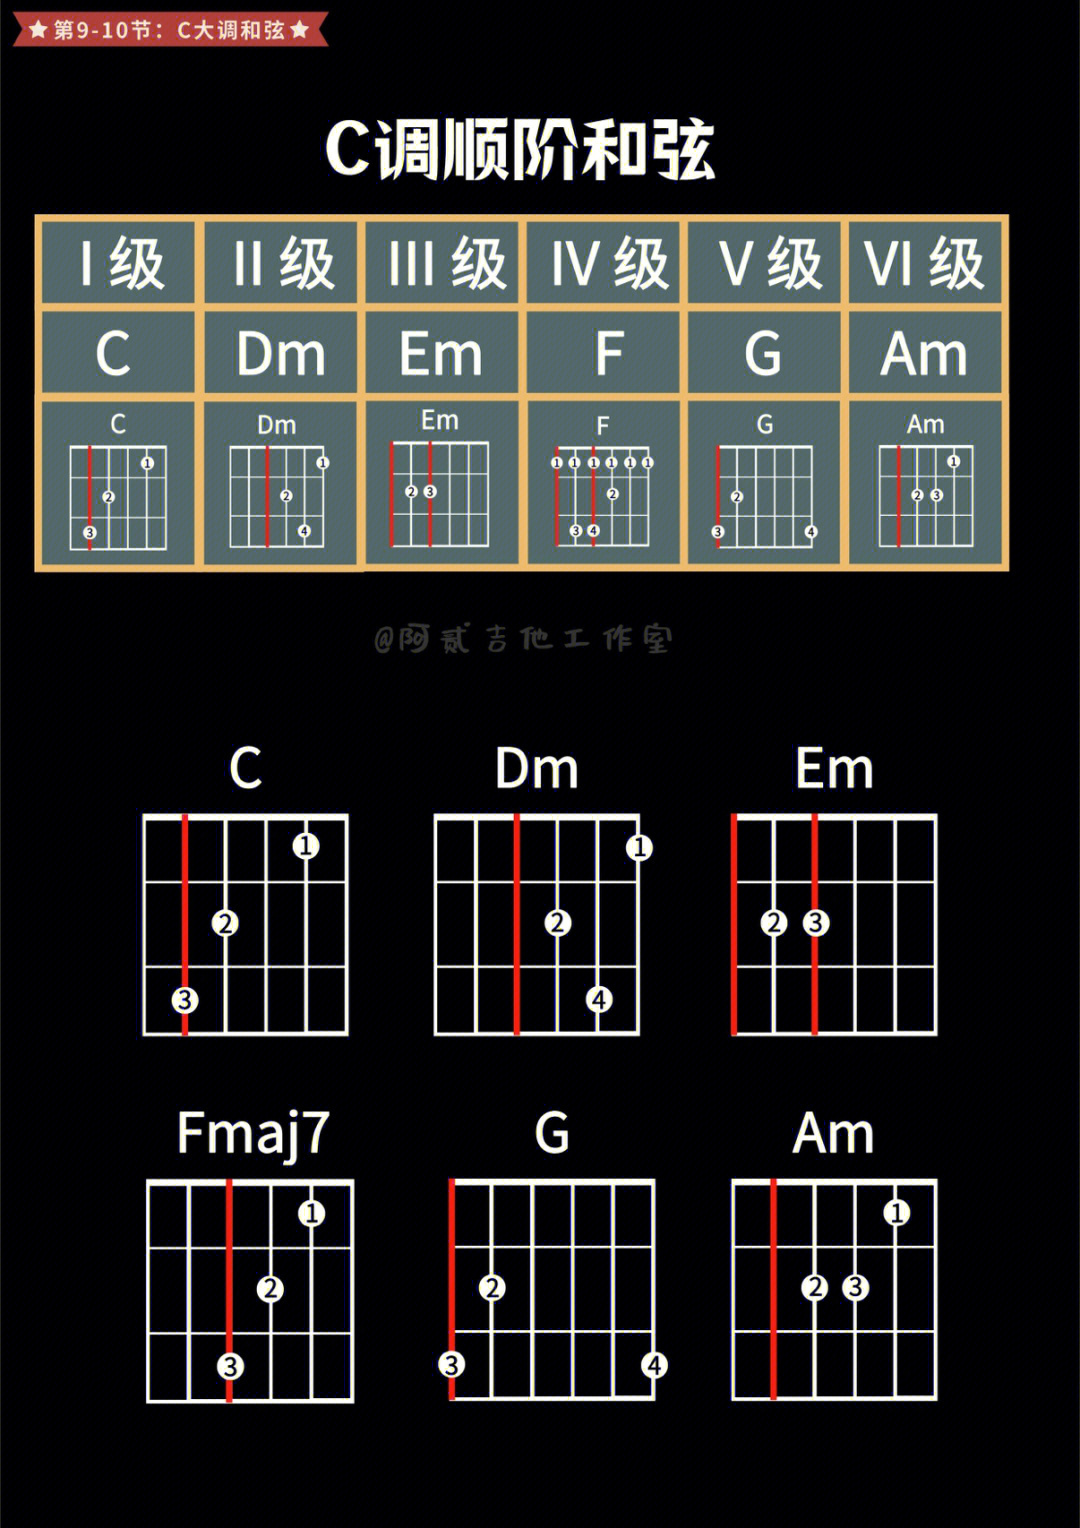 95cdefgab 七个大调的顺阶和弦99学习顺序c7915g7915d